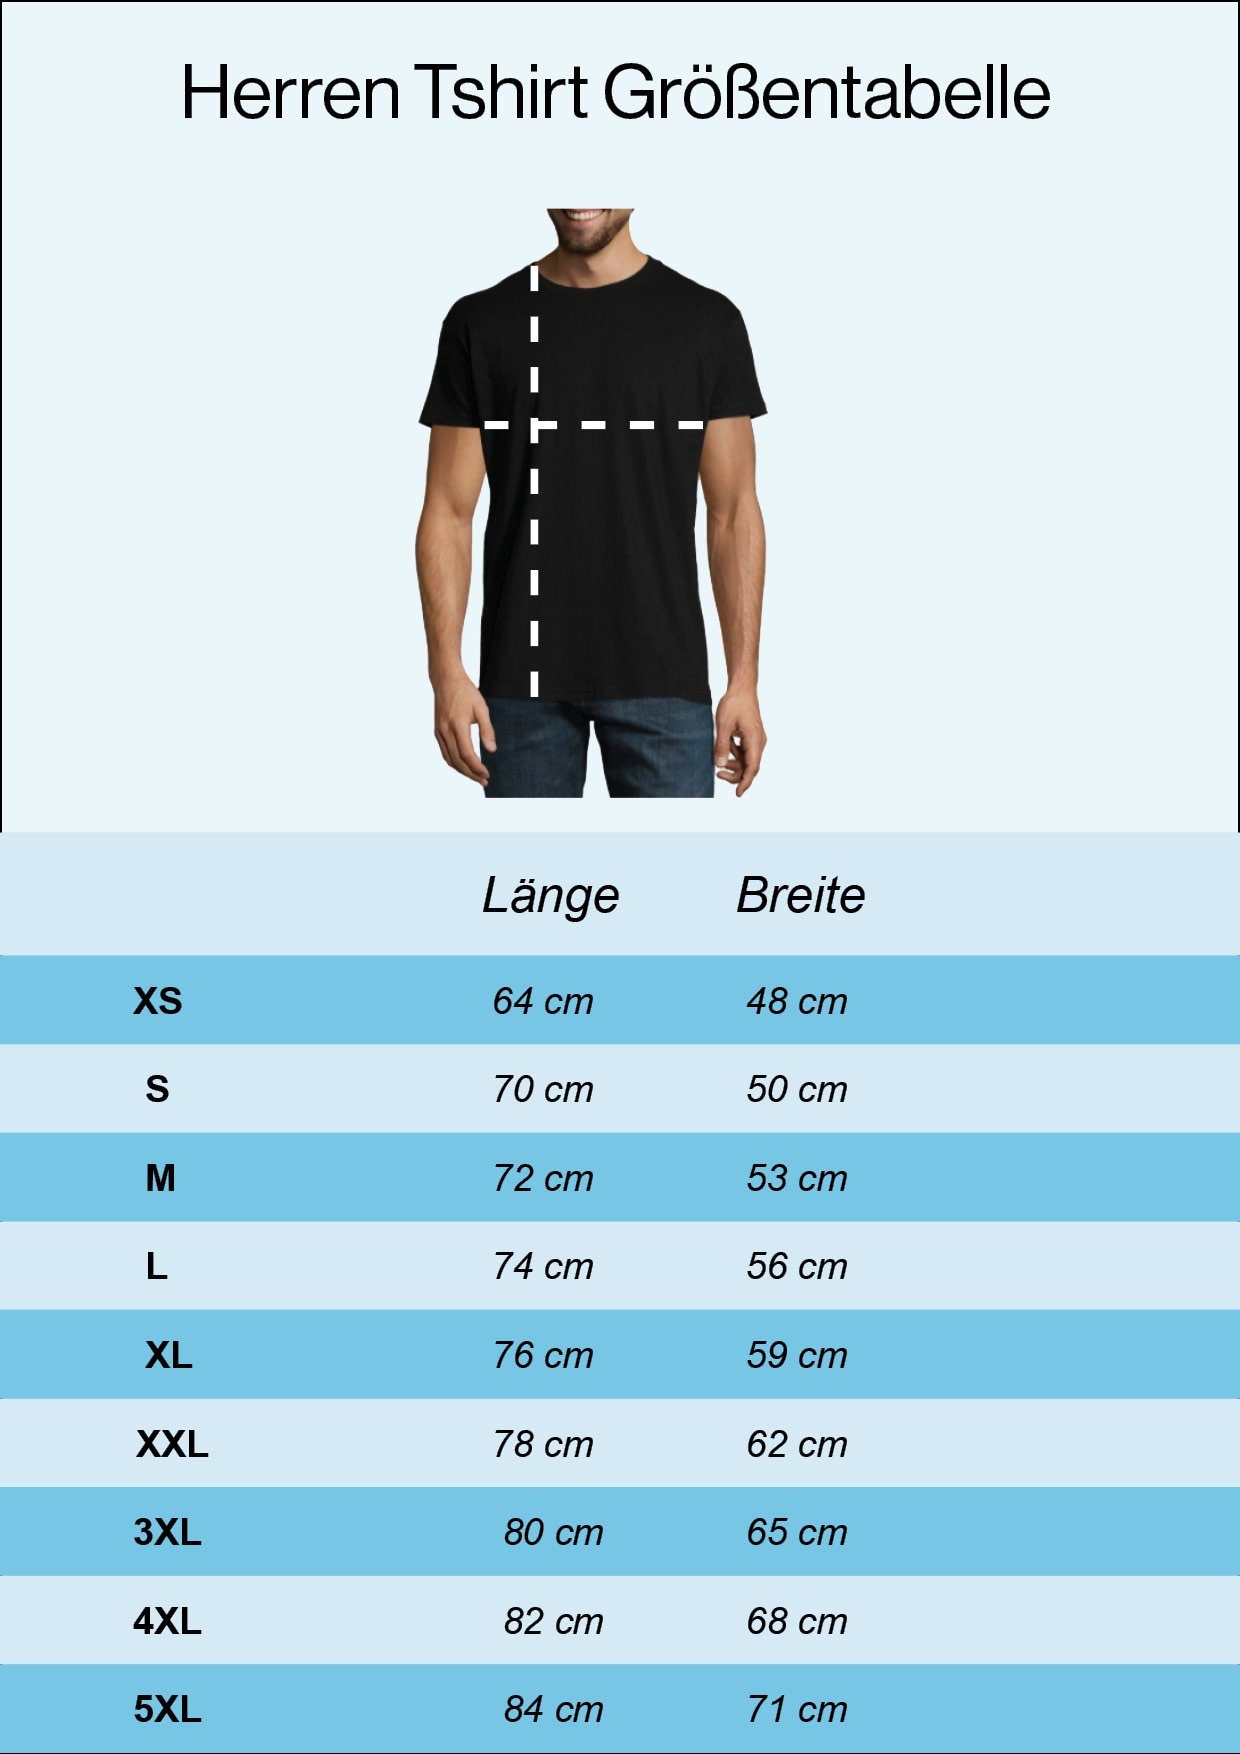 Mit Bazinga Designz T-Shirt Modell T-Shirt Herren Frontprint Schwarz Youth trendigem